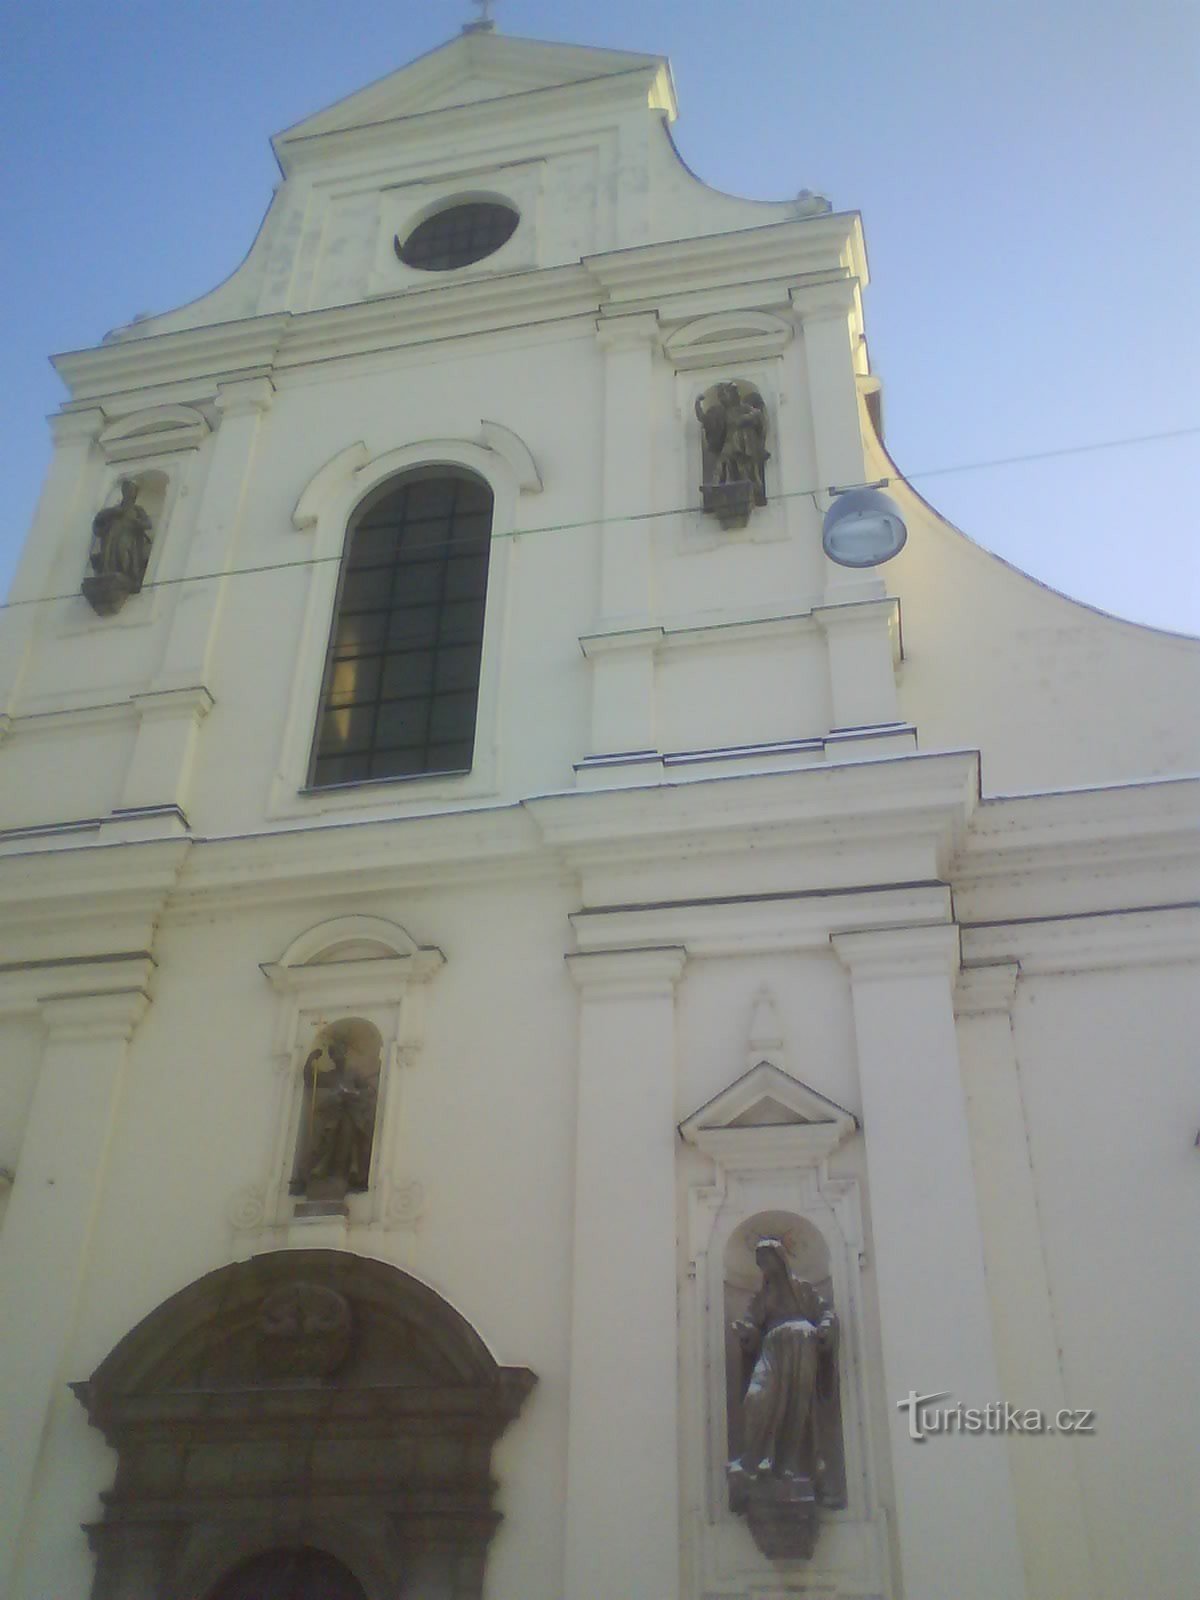 Biserica Sf. Tomas în Brno